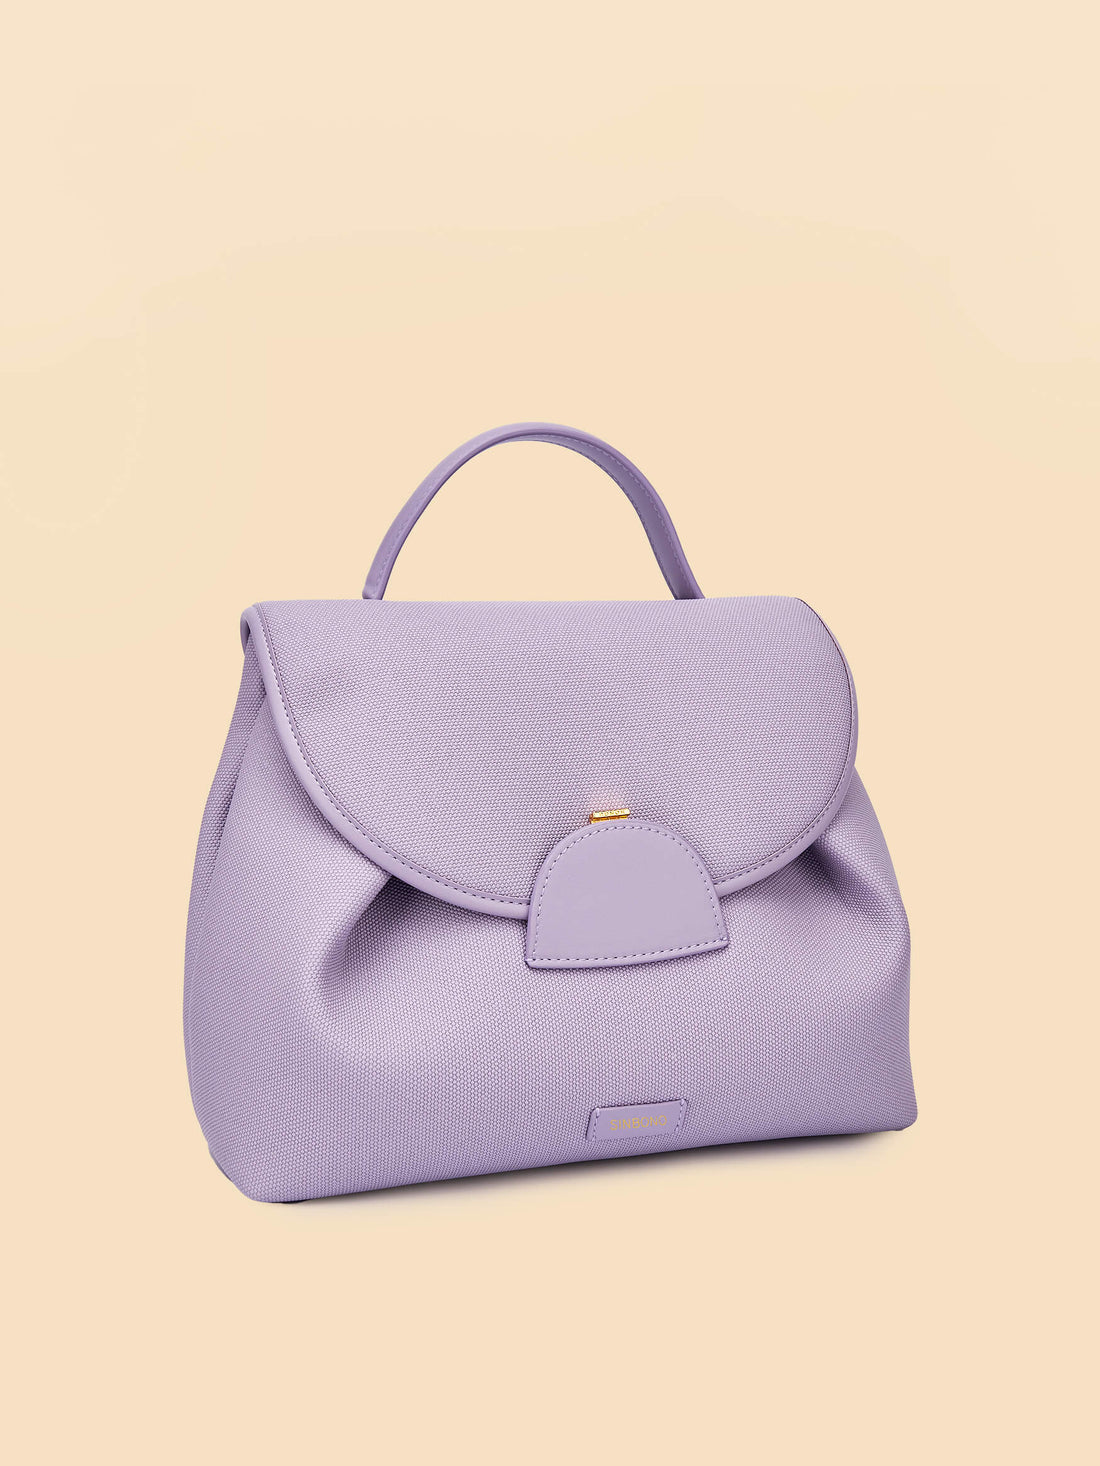 SINBONO Purple Crossbody Bag- High-quality Soft Vegan Leather Bag